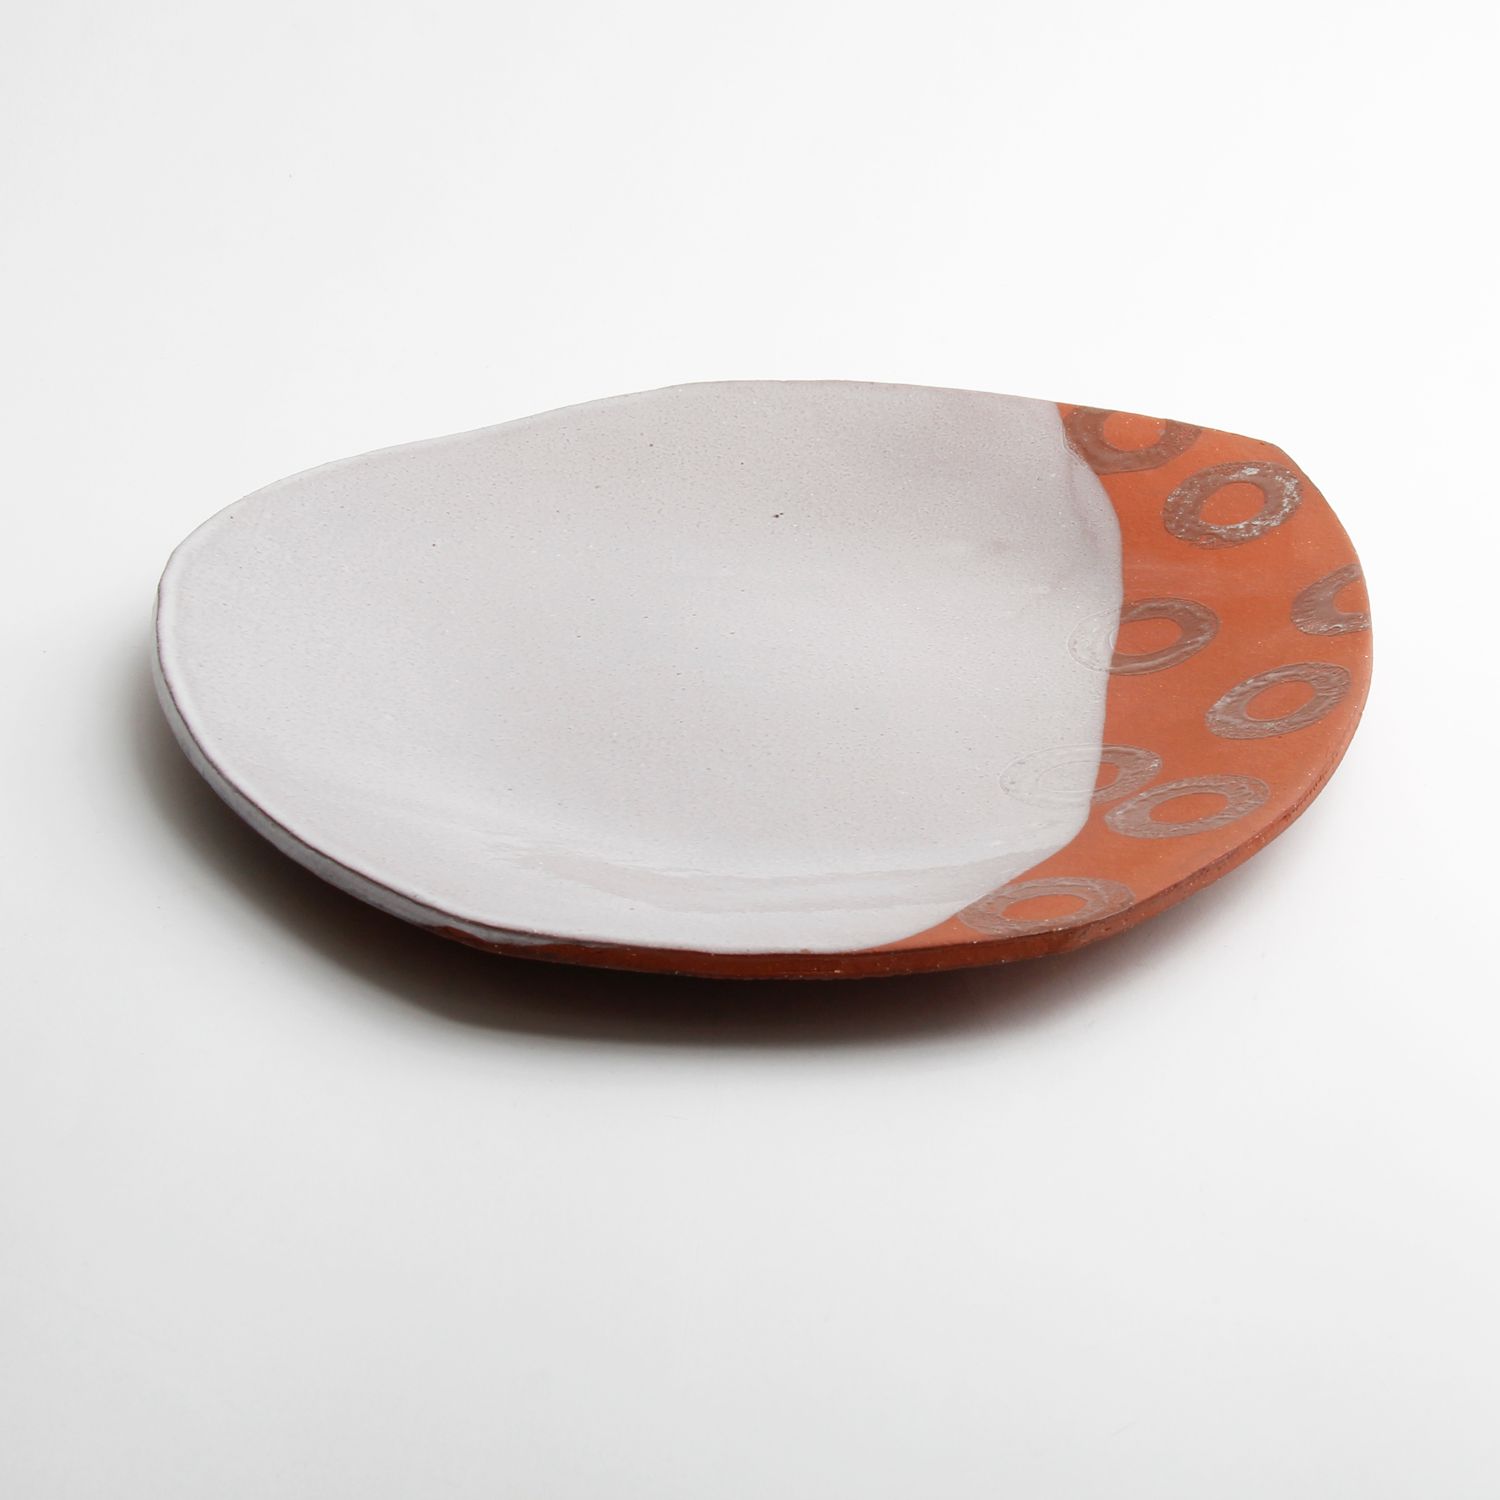 Mary McKenzie: Large Platter – Black Circles Product Image 2 of 2